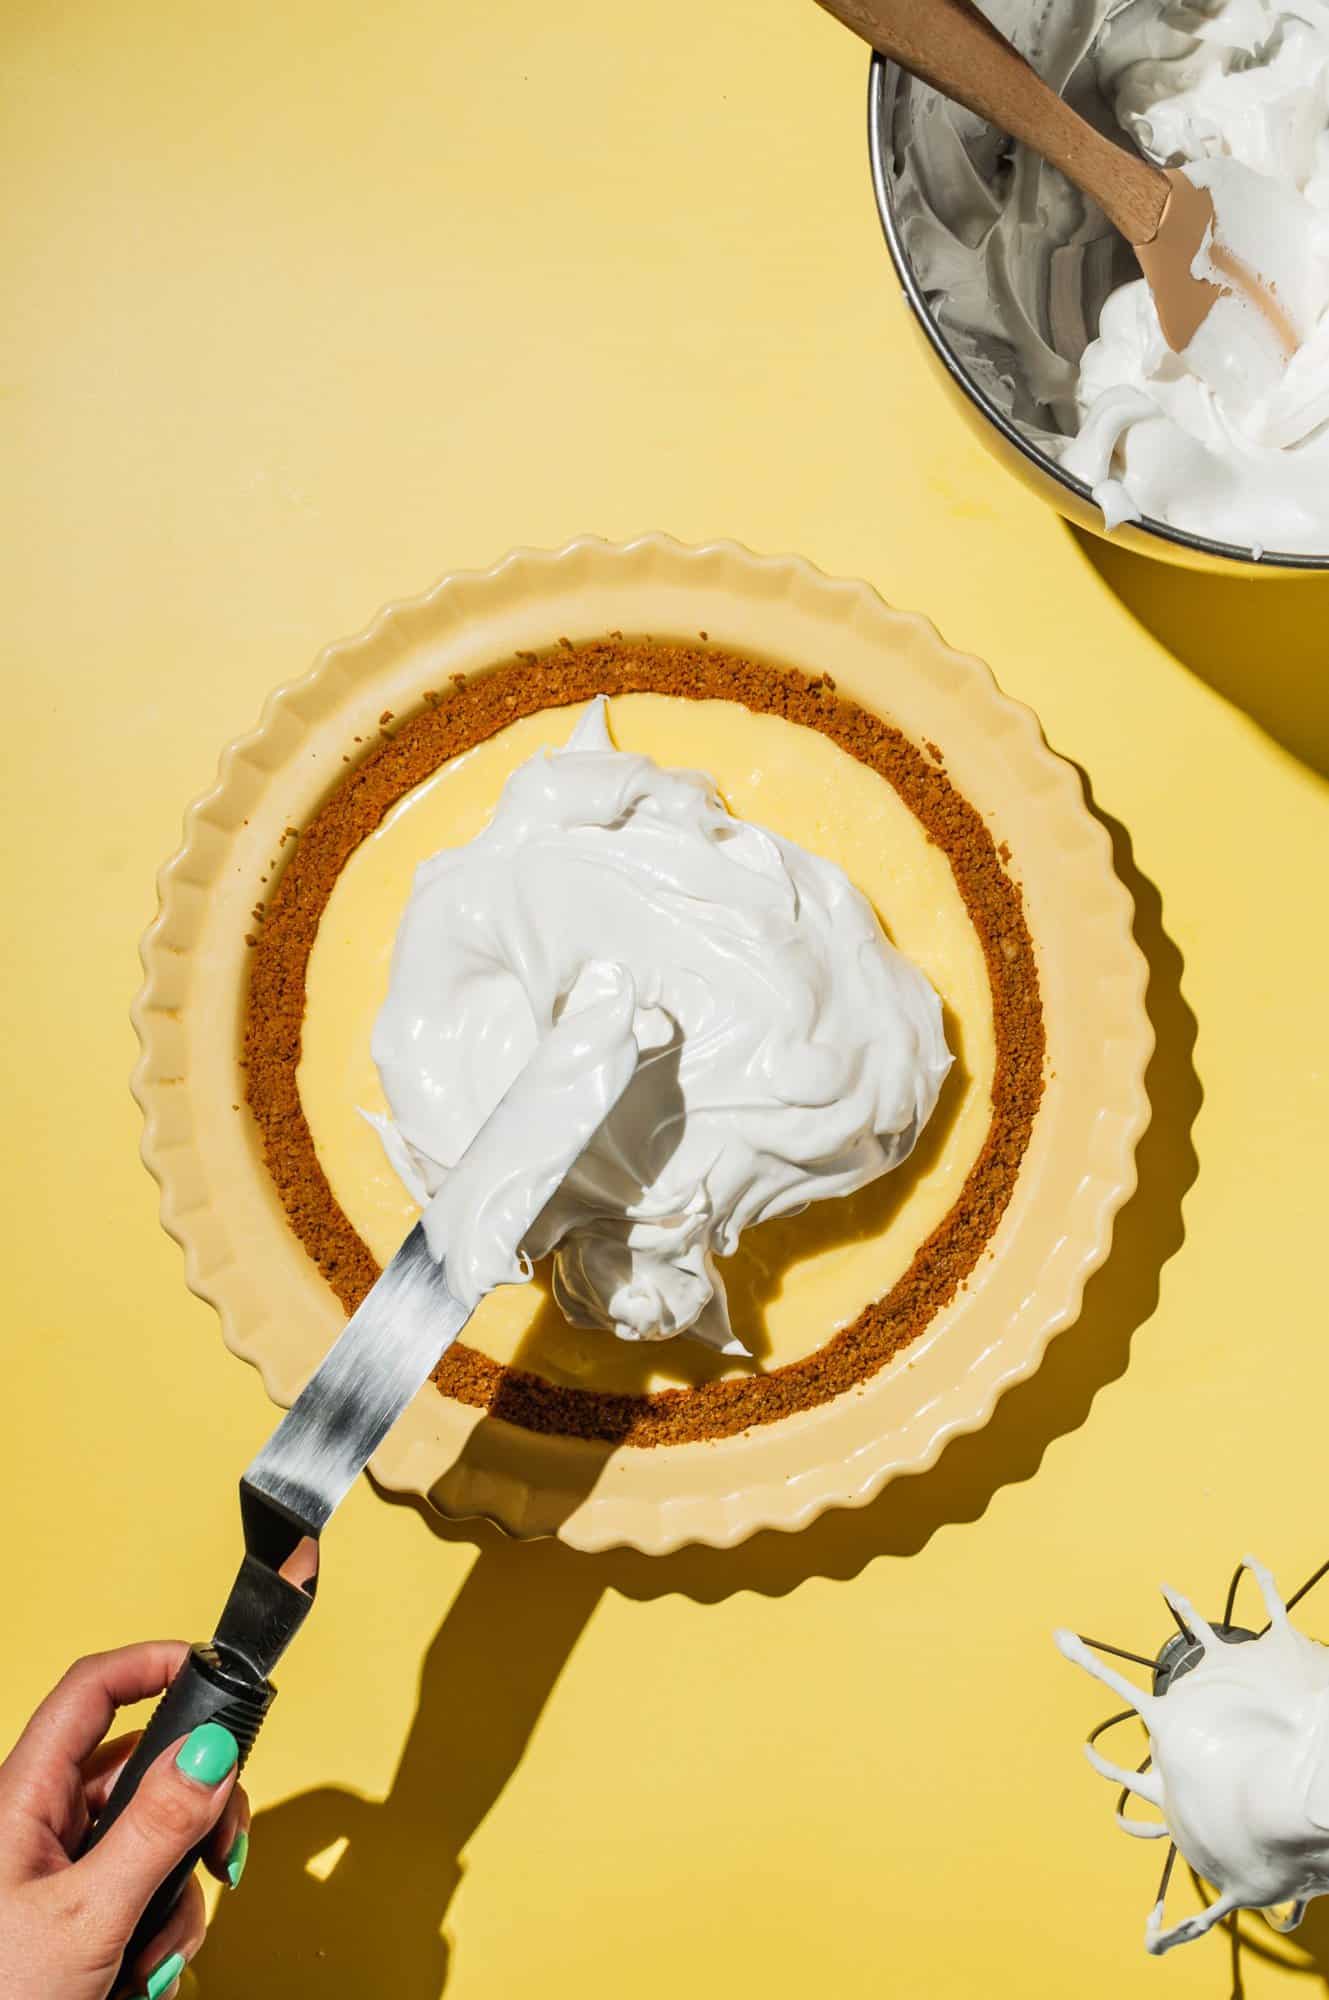 offset spatula spreading Swiss meringue onto lemon meringue pie